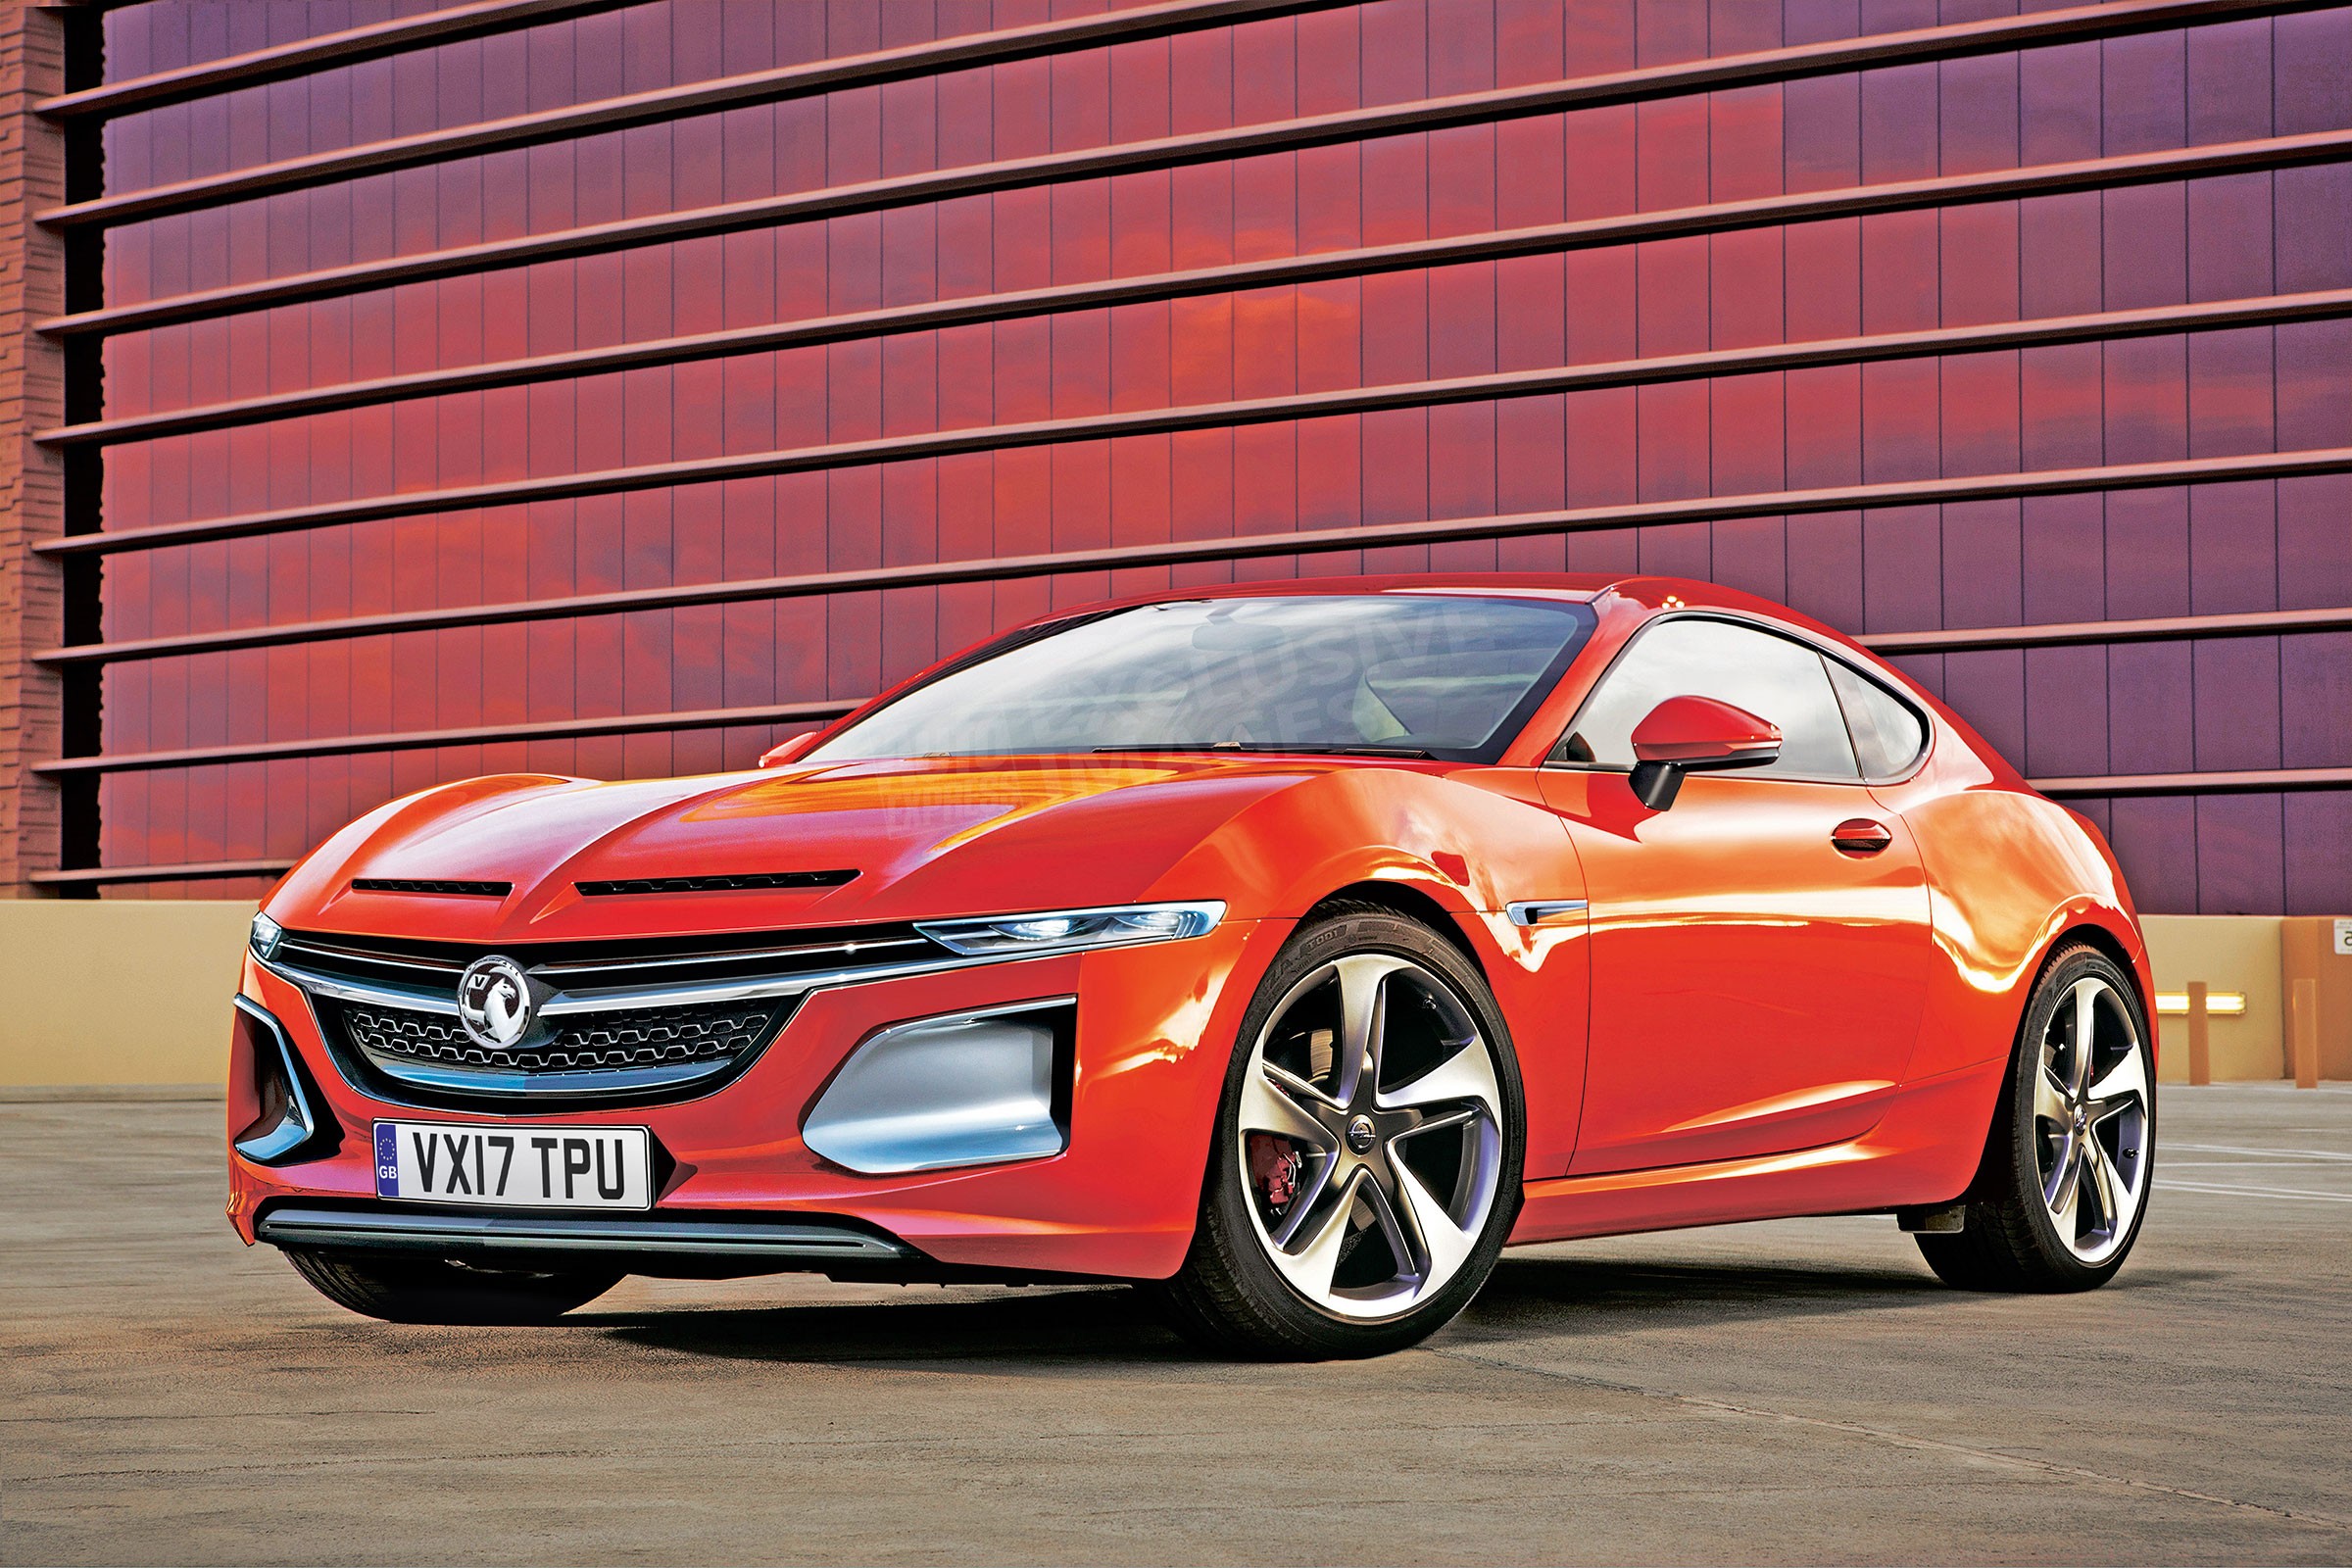 Концепт Opel GT может перейти на серийное производство